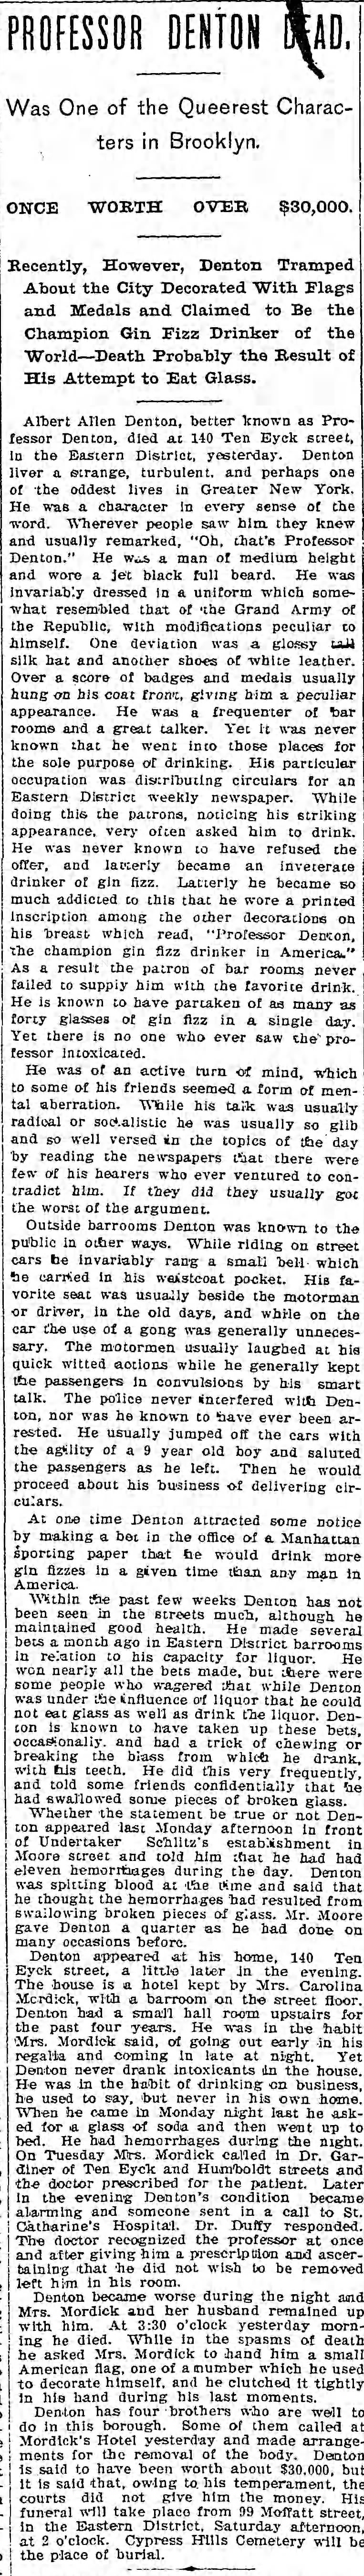 1898.10.06 (Thu) The Brooklyn Daily Eagle - Barflies - 'Professor Denton'